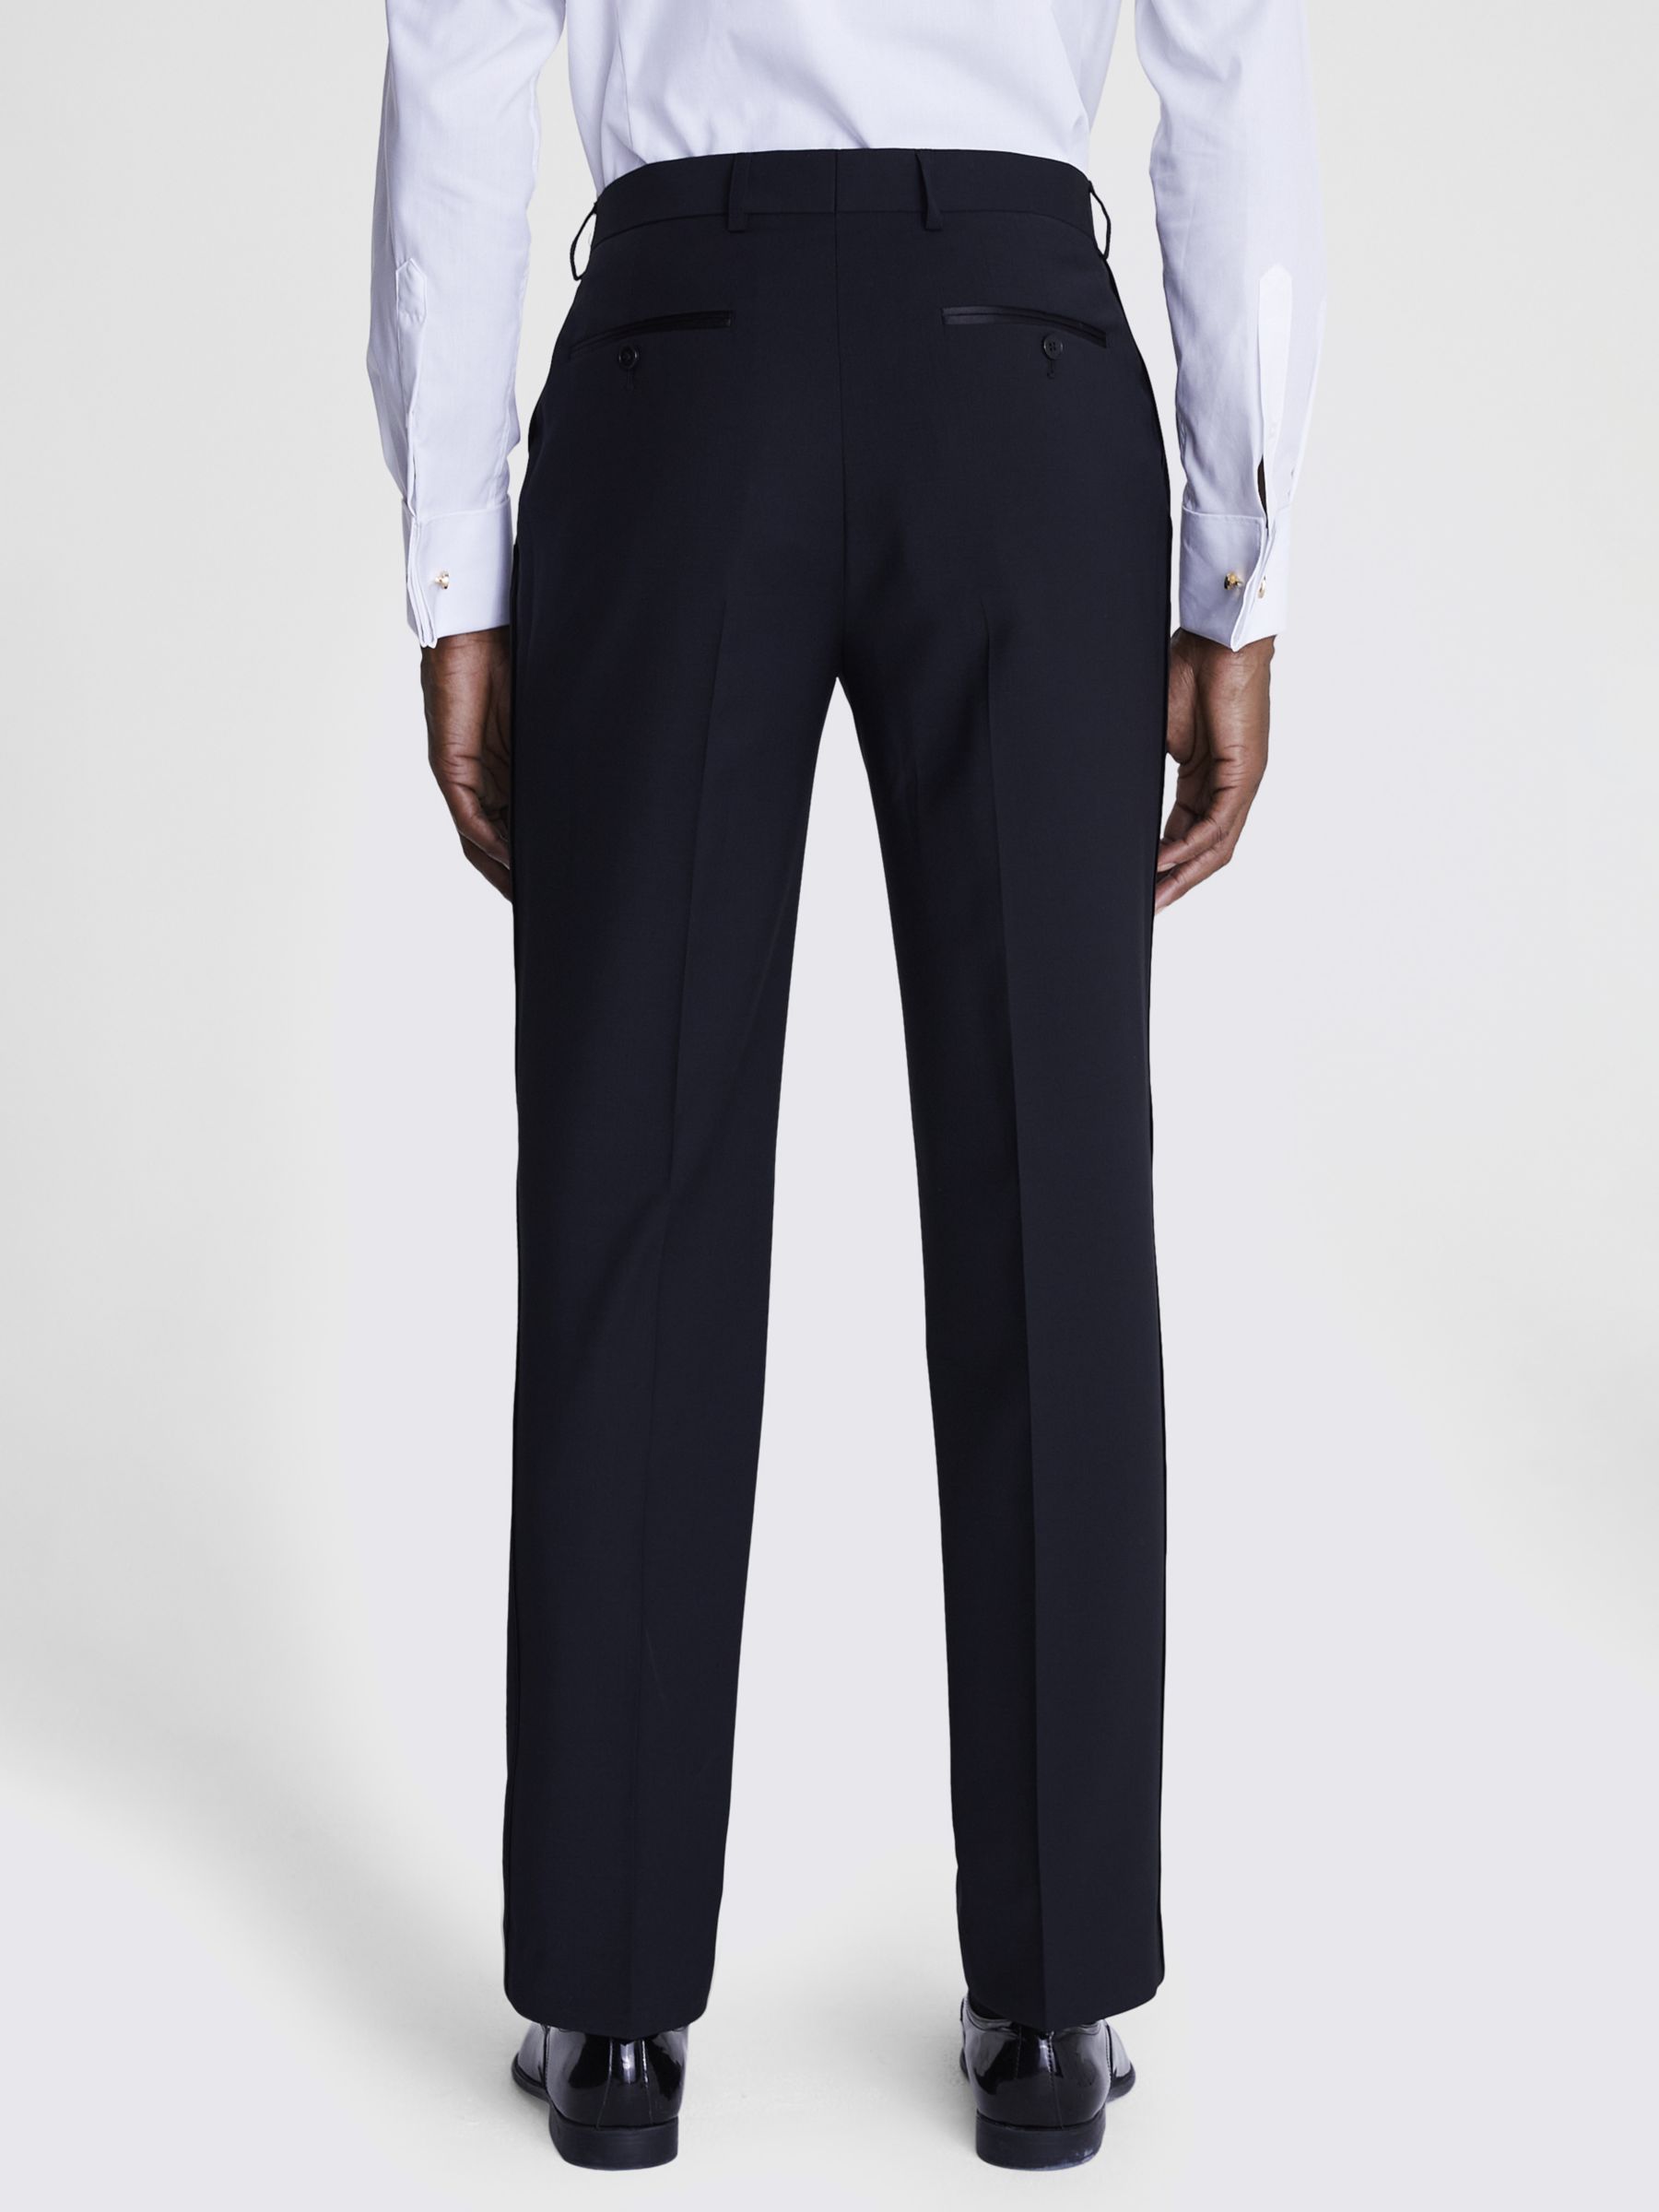 Moss Regular Fit Dress Trousers, Black at John Lewis & Partners